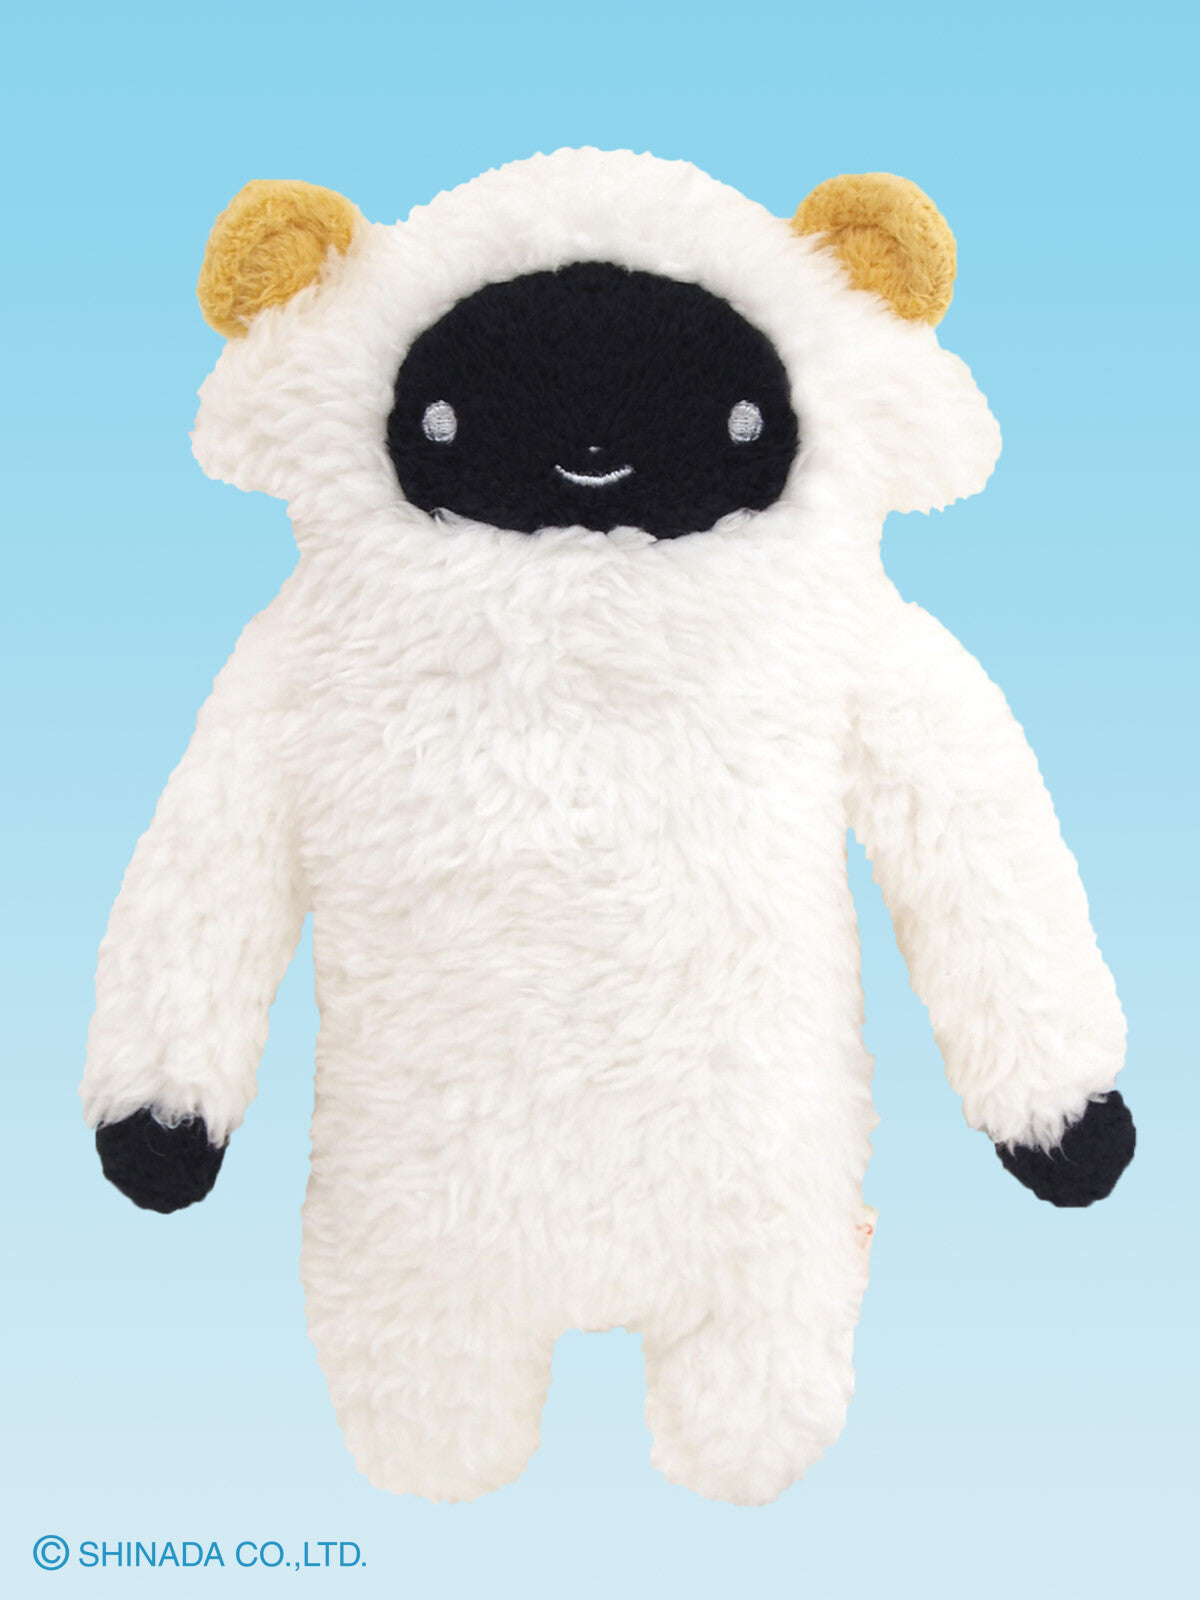 Fumofumo San Fluffy Black and White Sheep (20cm)